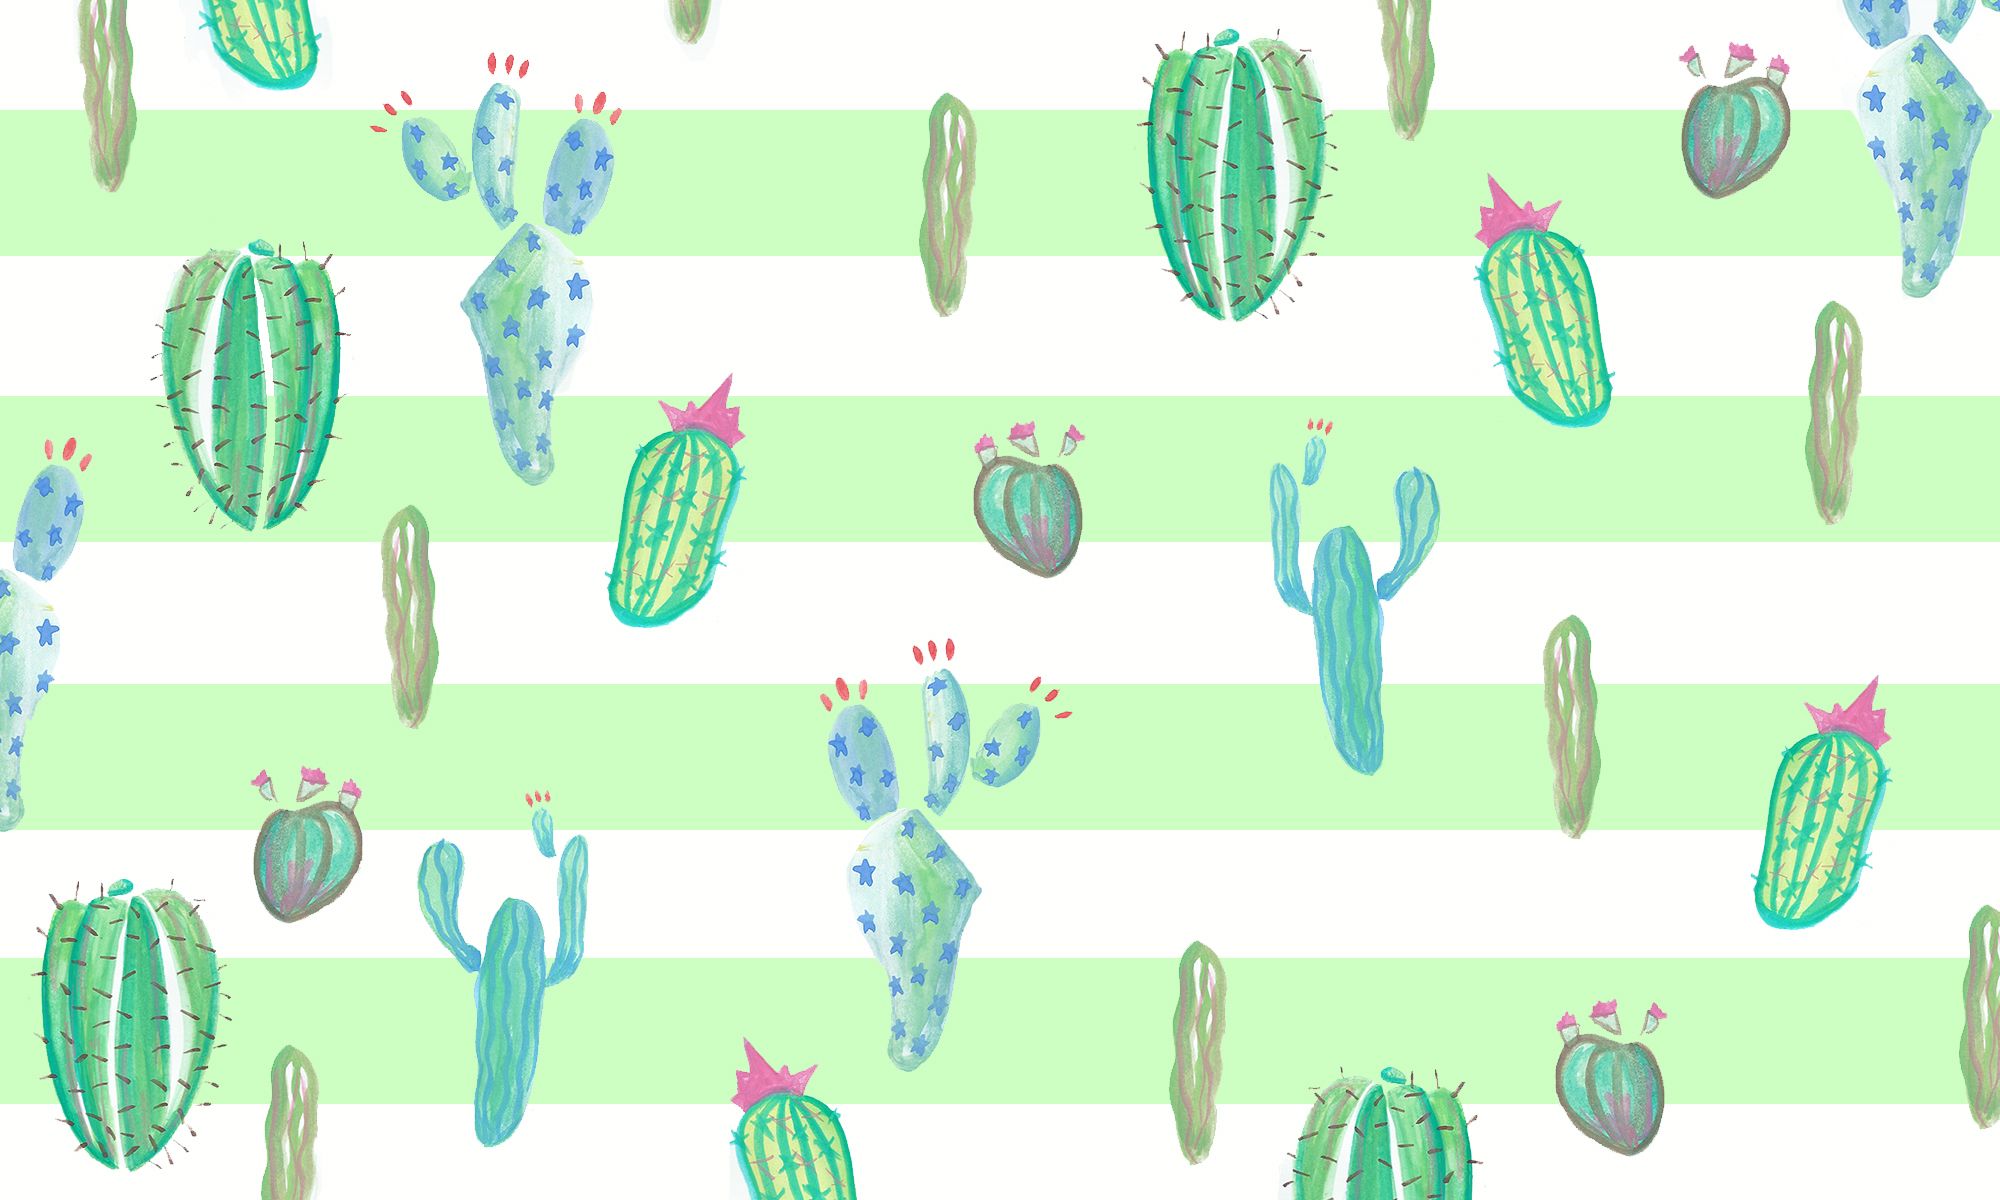 Free download Cactus Wallpaper and Background Image stmednet [2000x1200] for your Desktop, Mobile & Tablet. Explore Cactus Wallpaper. Cactus Wallpaper, Cactus Wallpaper, Cactus Wallpaper Border